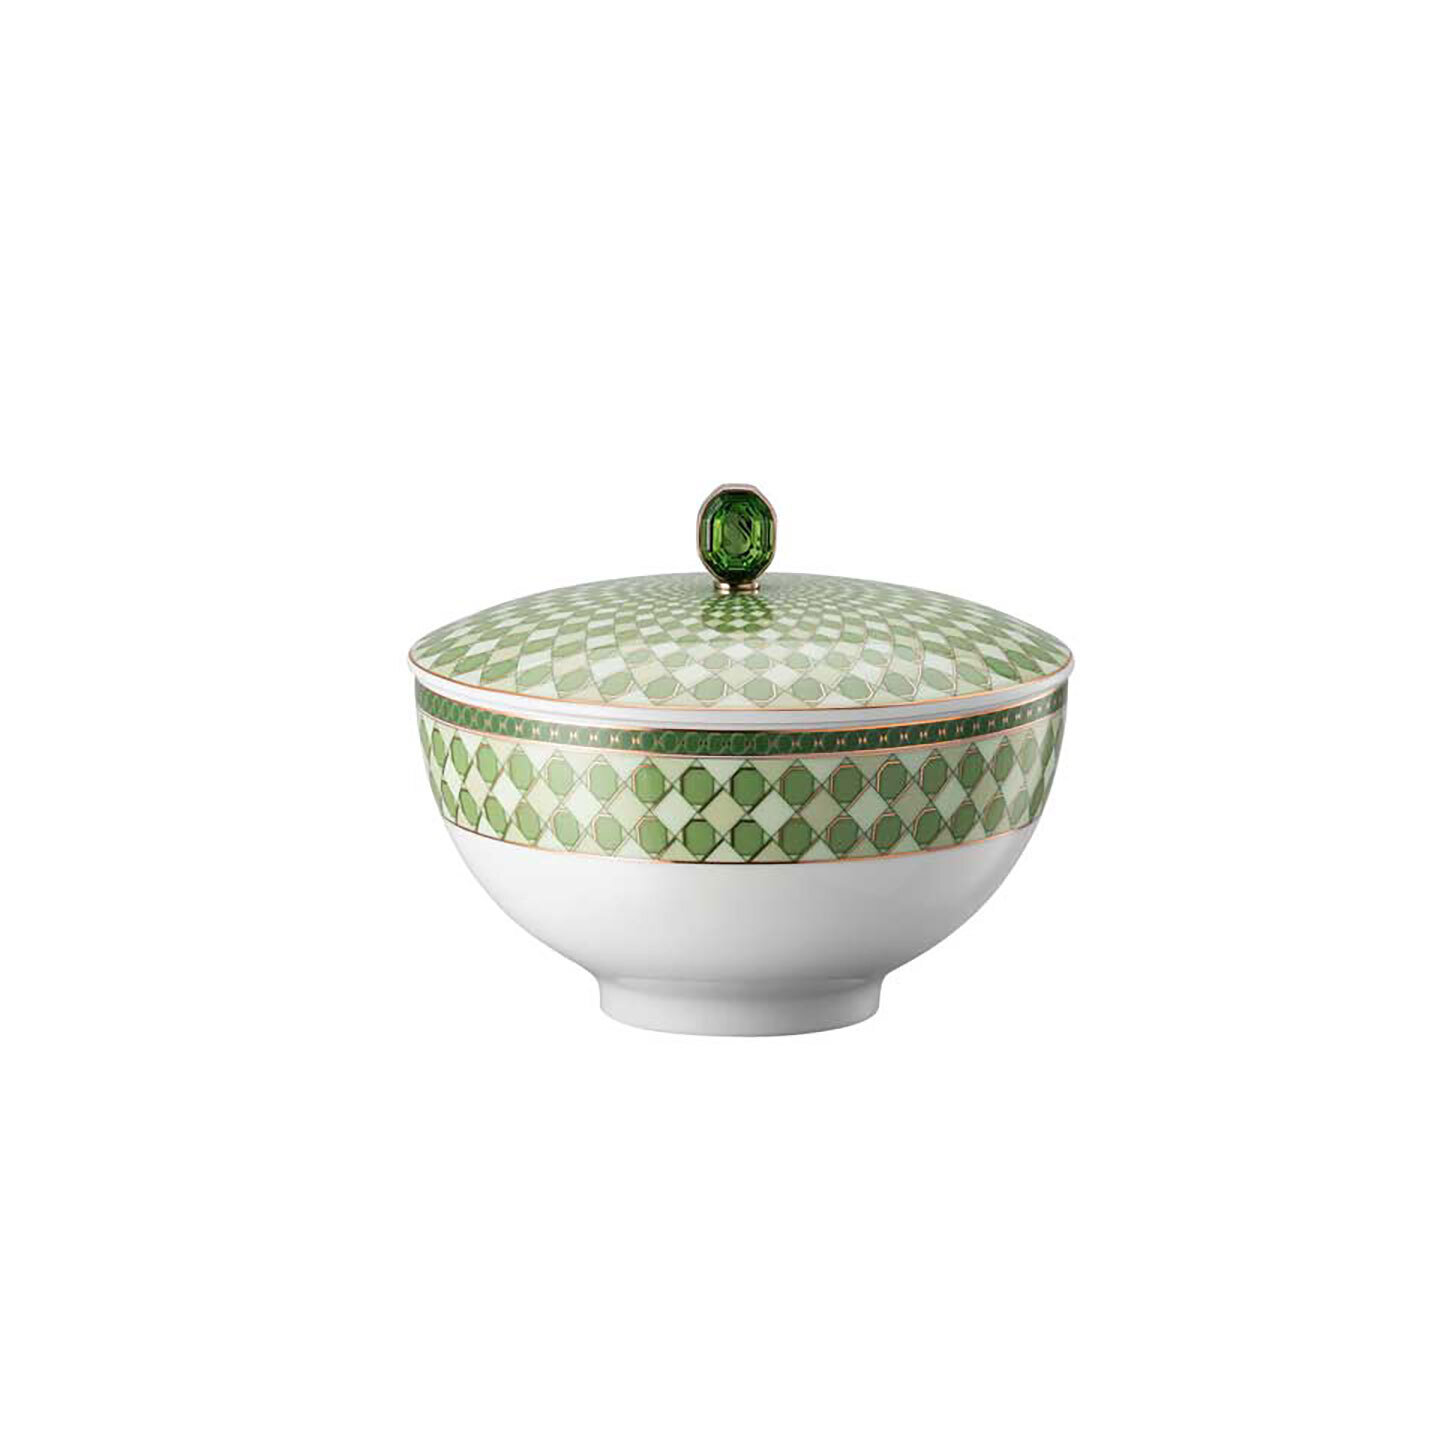 Rosenthal Swarovski Signum Soup Bowl with Lid 6 Inch 27 oz Fern Green 14204-426349-15381